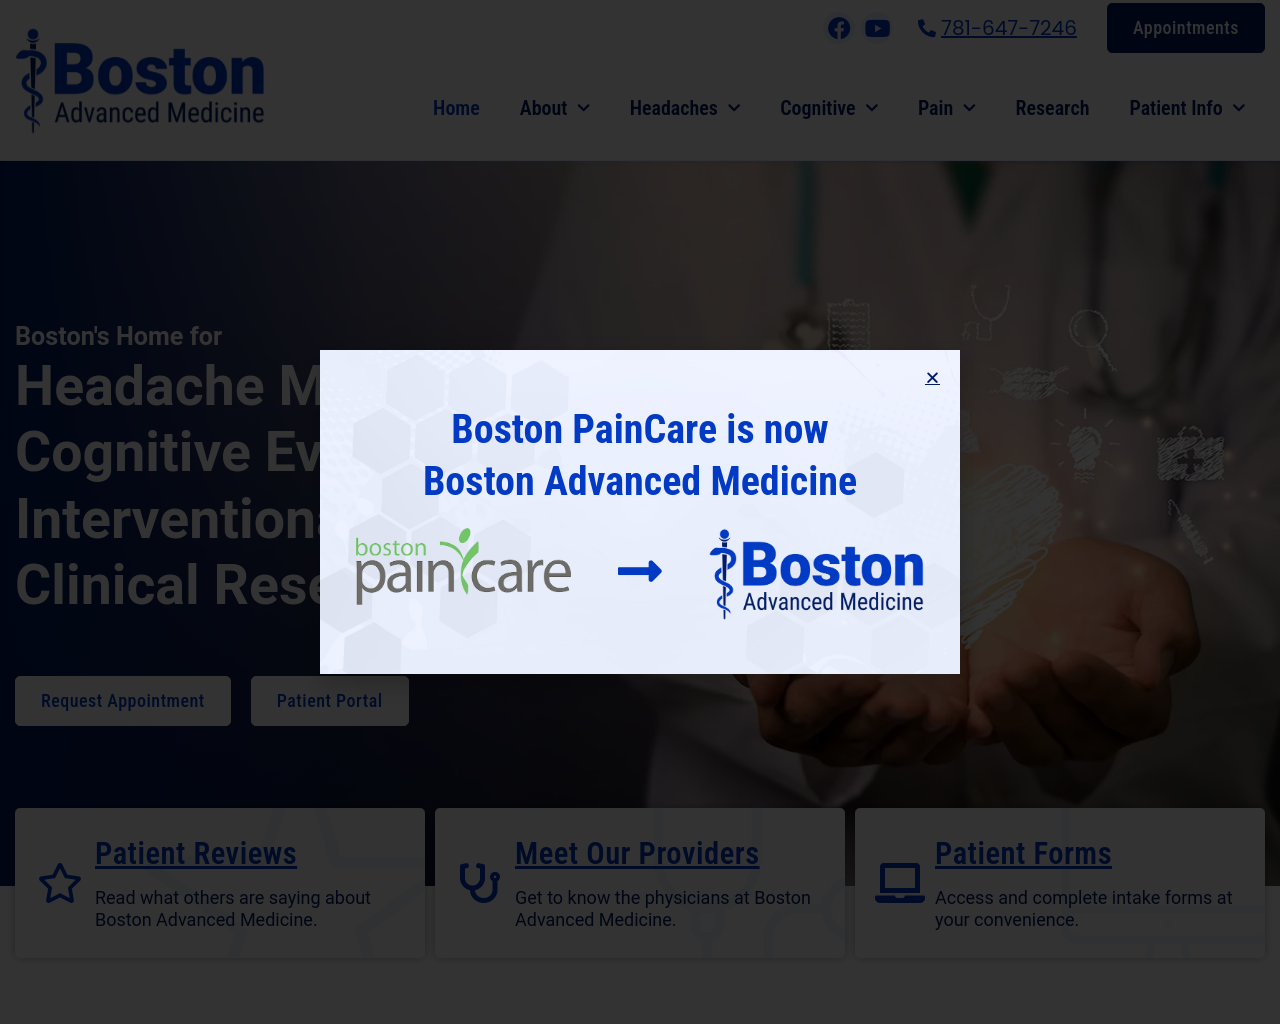 bostonpaincare.com